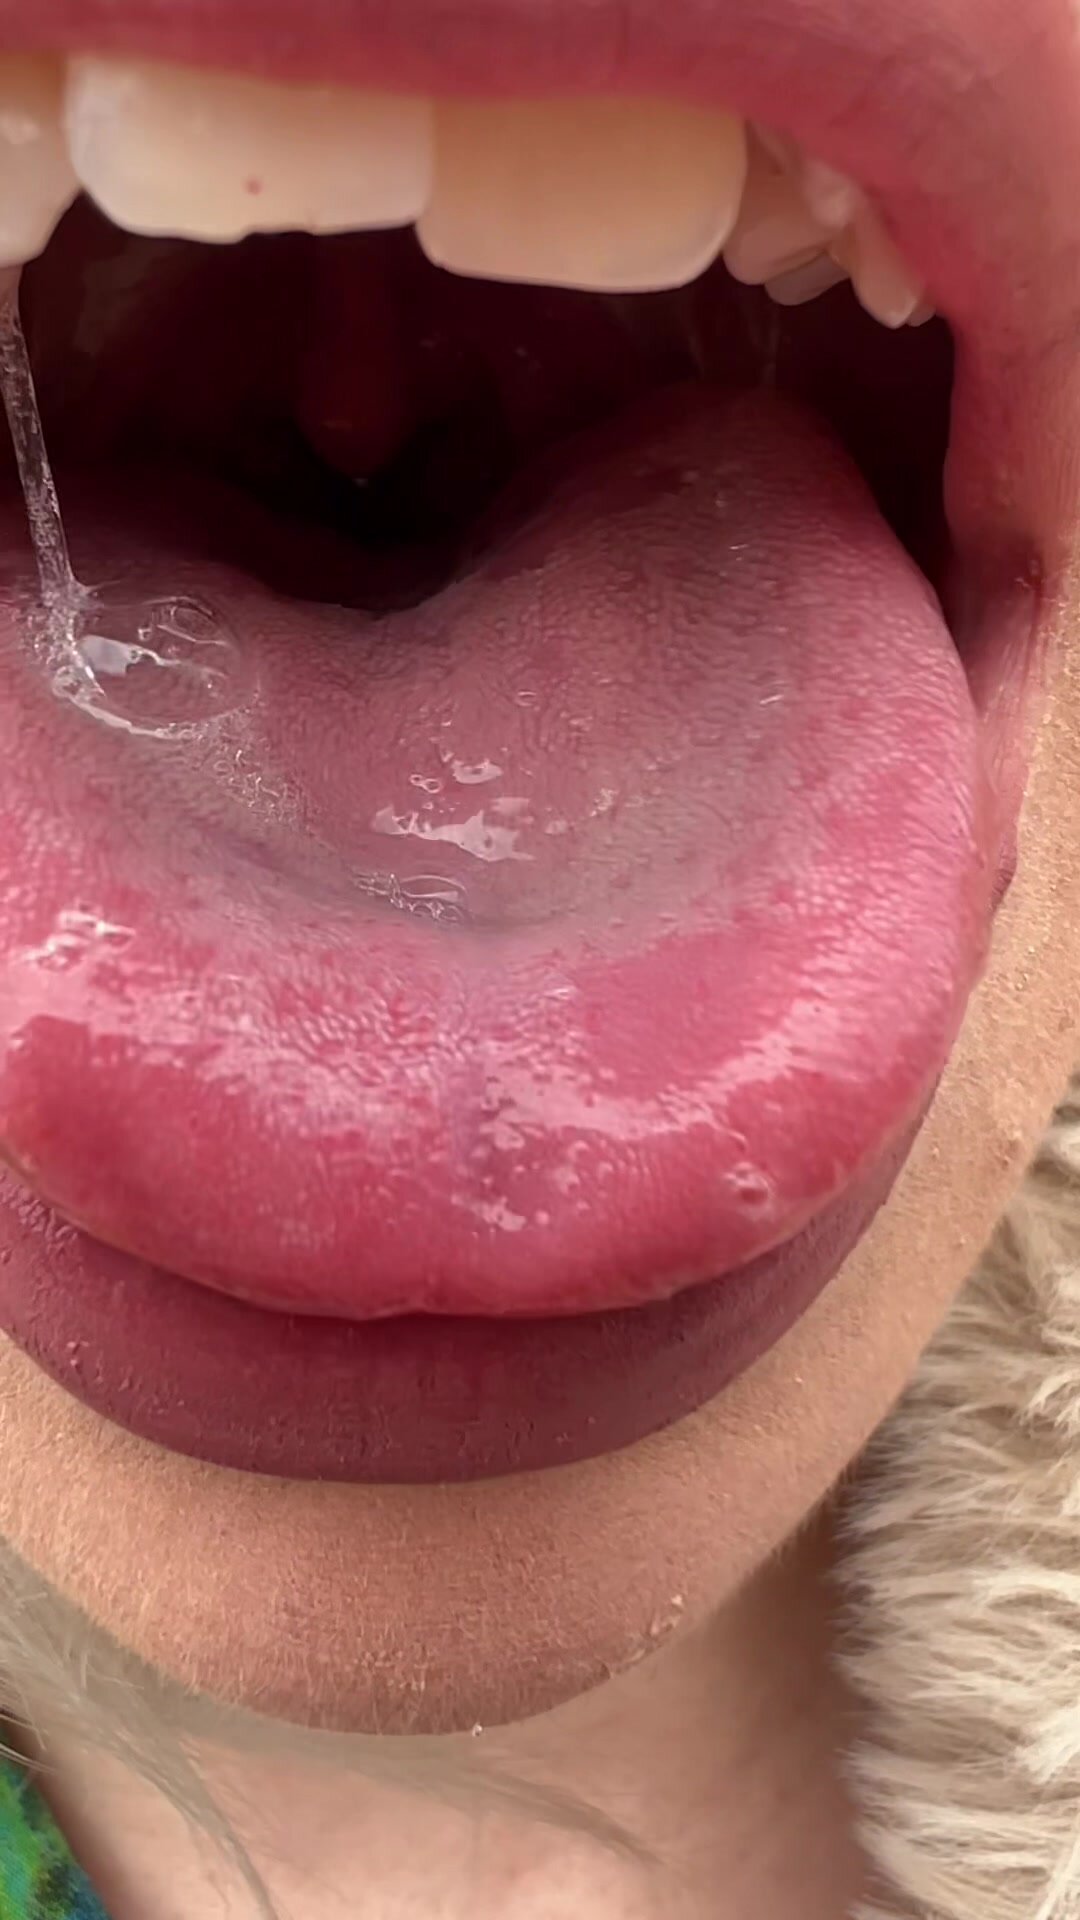 Mouth tongue uvula